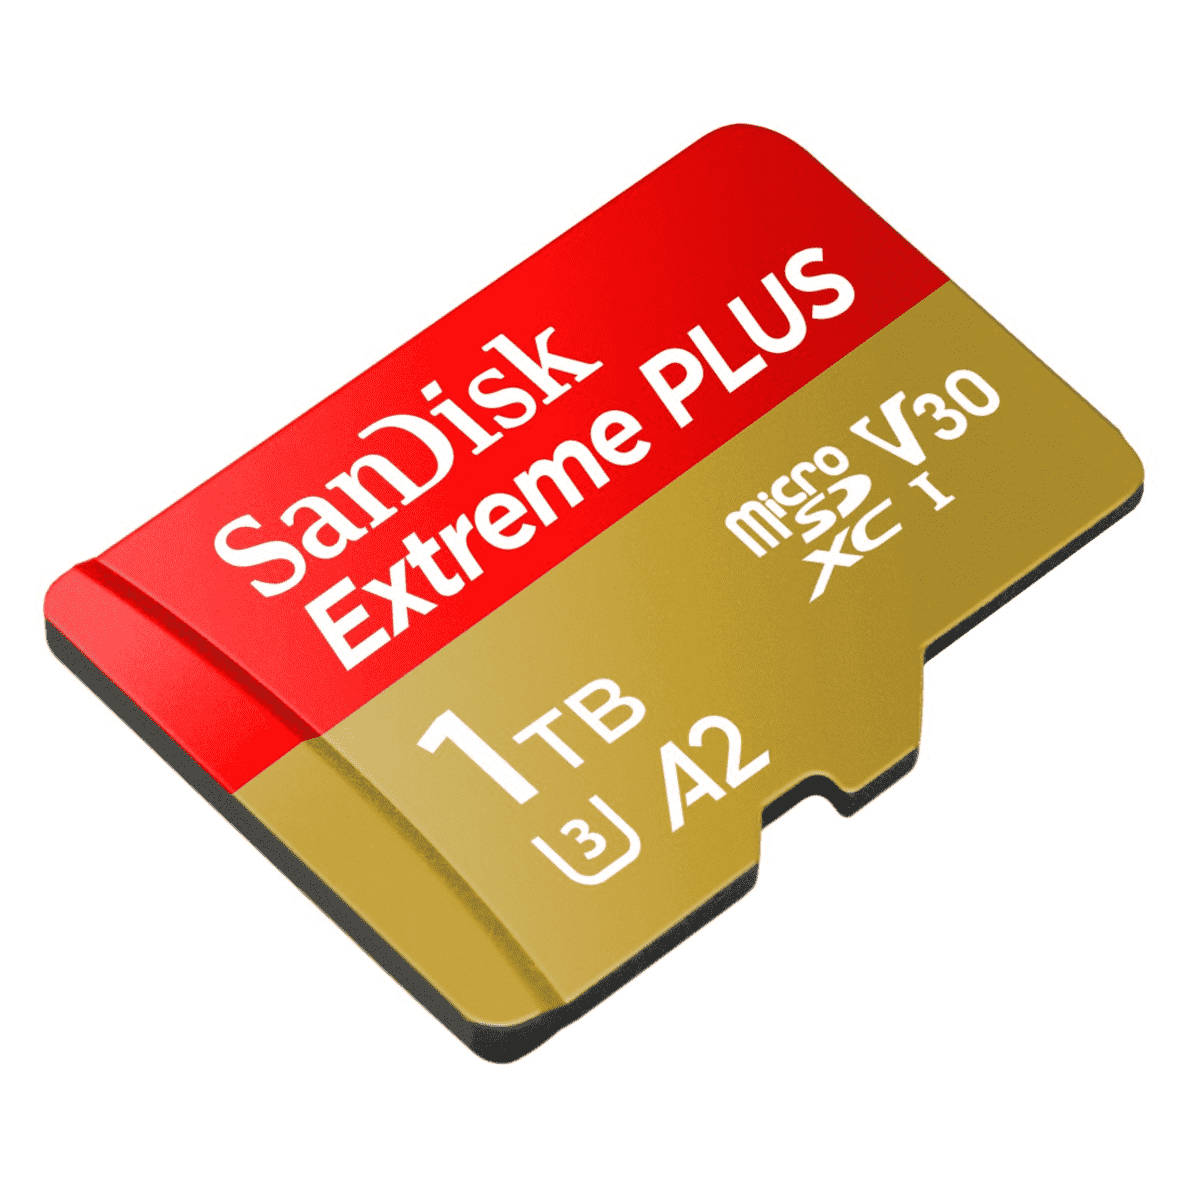 SANDISK Elite Extreme® PLUS UHS-I, Micro-SDXC Speicherkarte, 1 TB, 200 MB/s